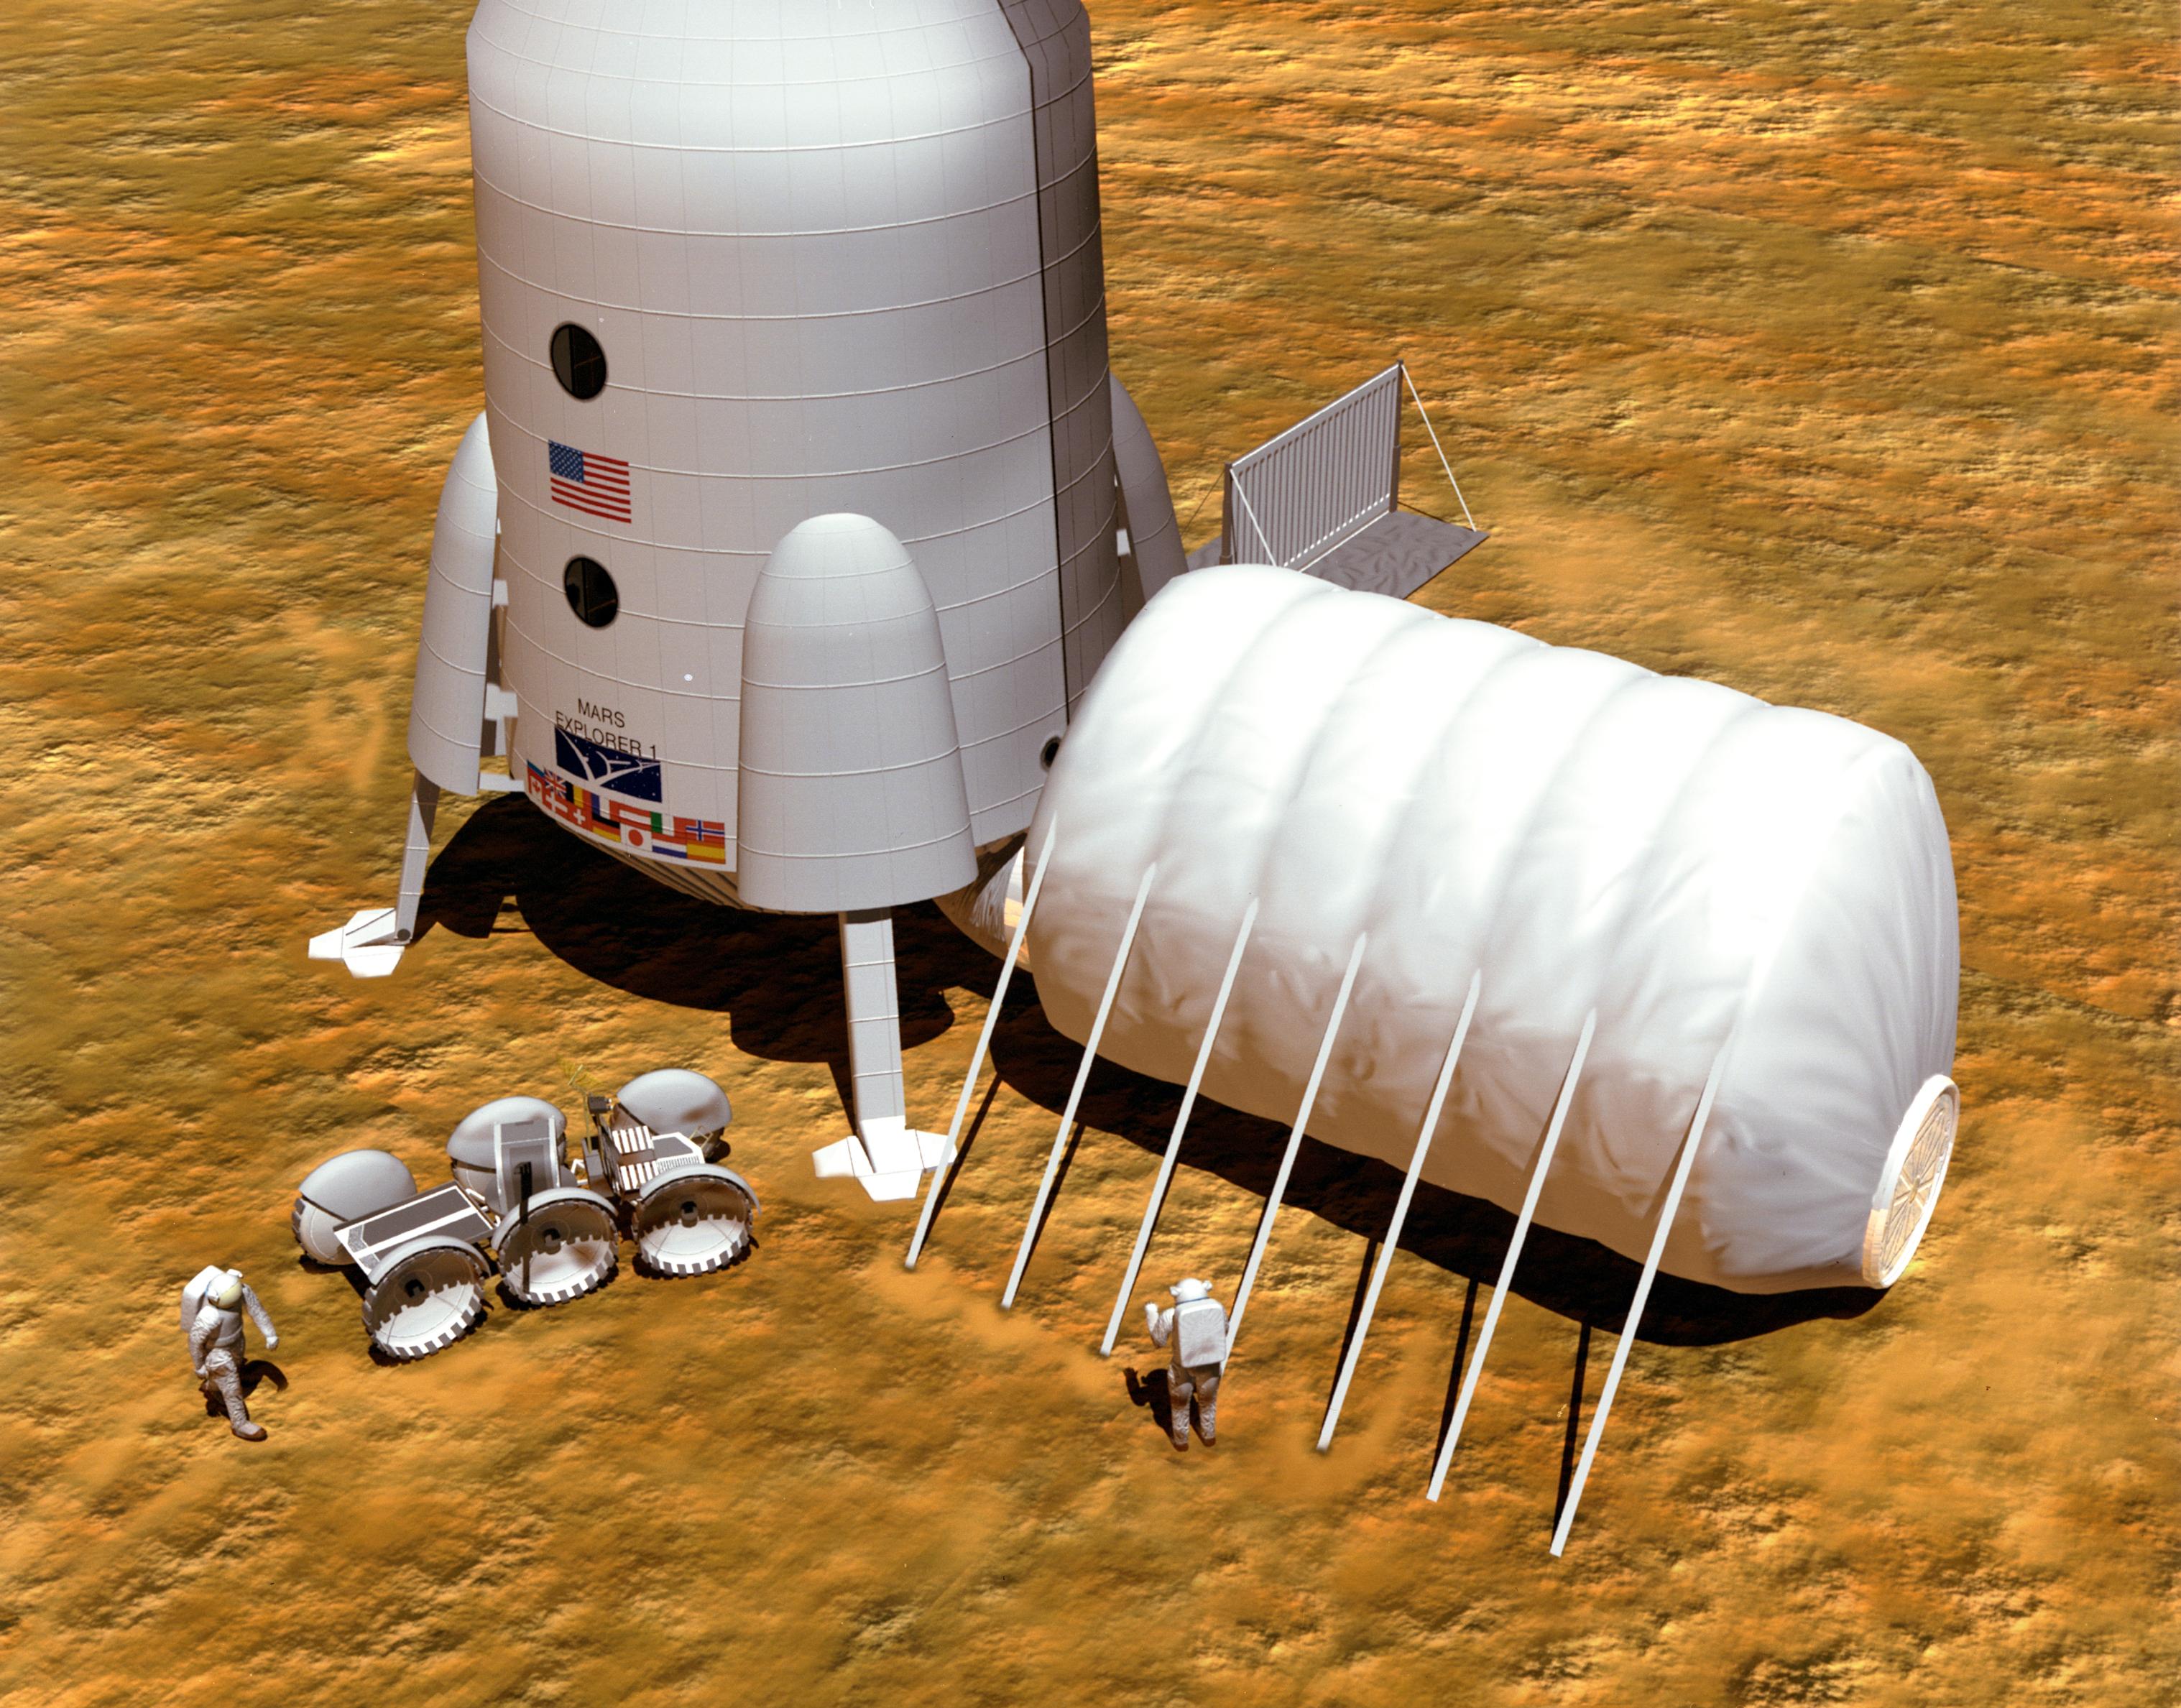 6192_mars-human-exploration-art-astronaut-habitat-rover-full2.jpg